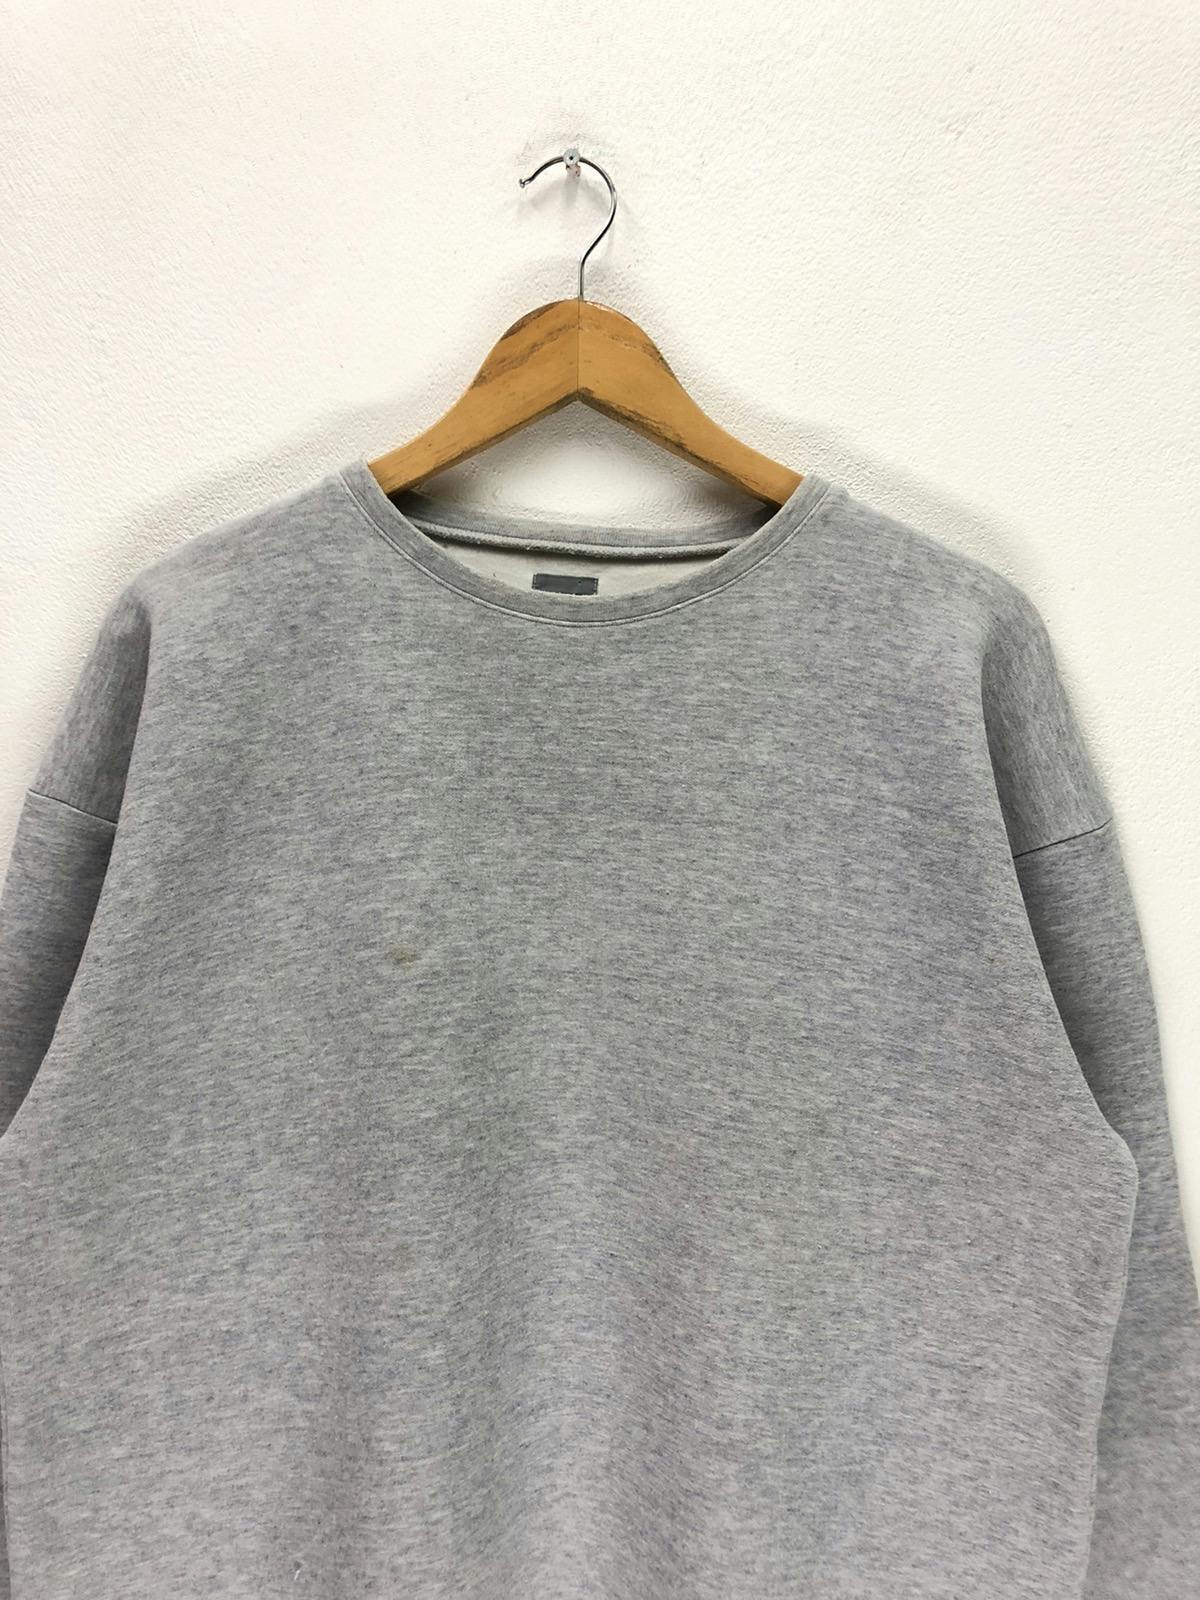 Jil Sander Plain Sweatshirt Made in italy - 2